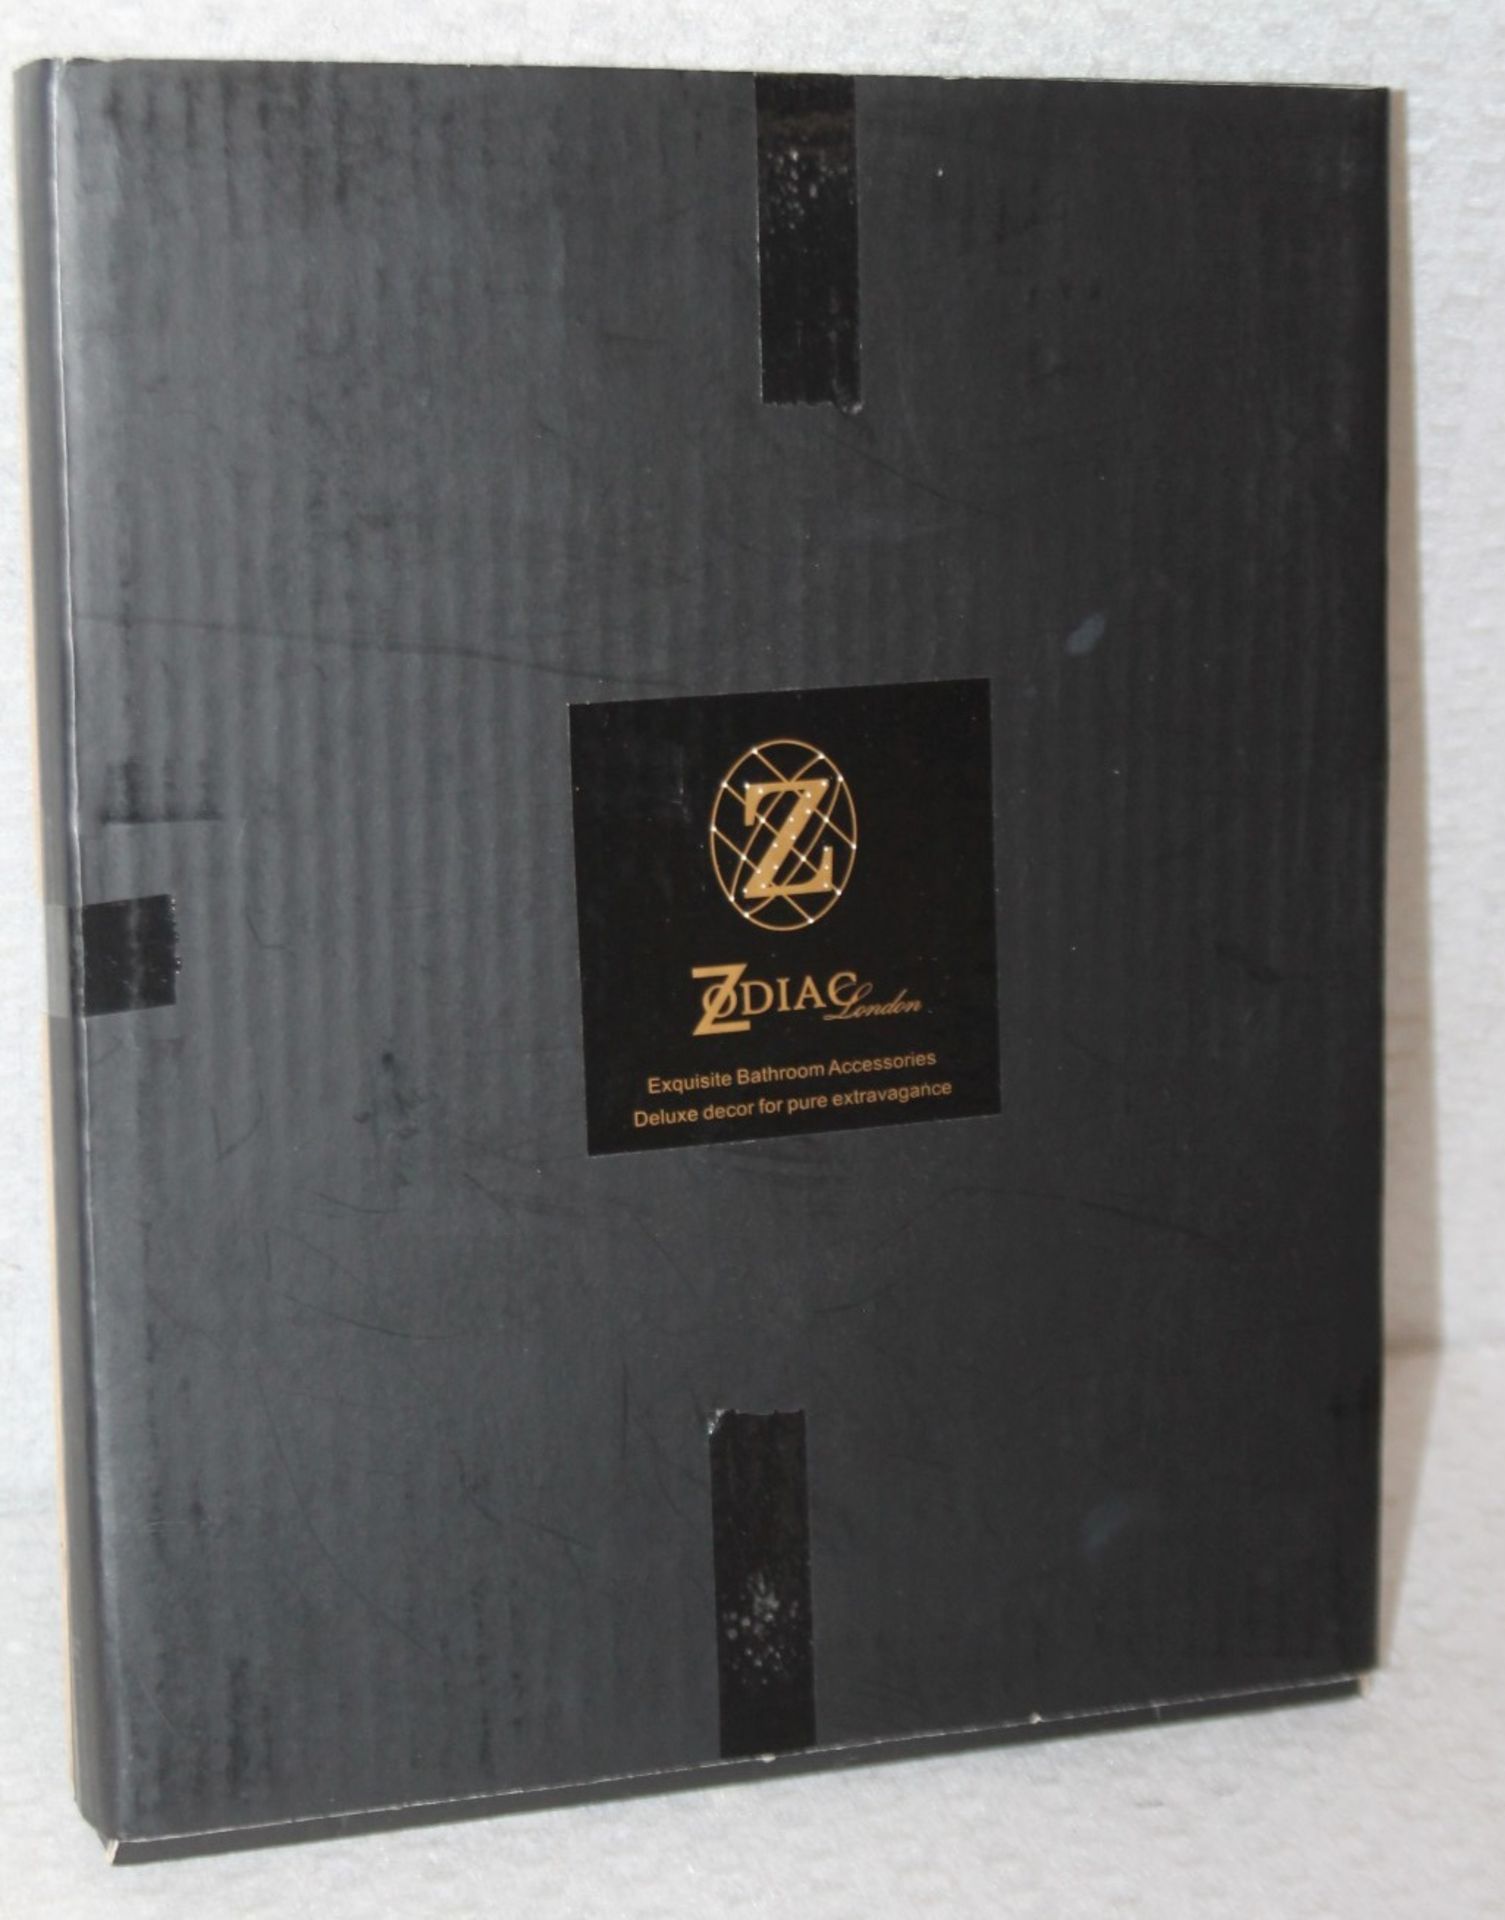 1 x ZODIAC Designer Tray With A Dark Nickel Finish - Original Price £439.00 - Ref: 5332914/HAS1171/ - Image 5 of 6